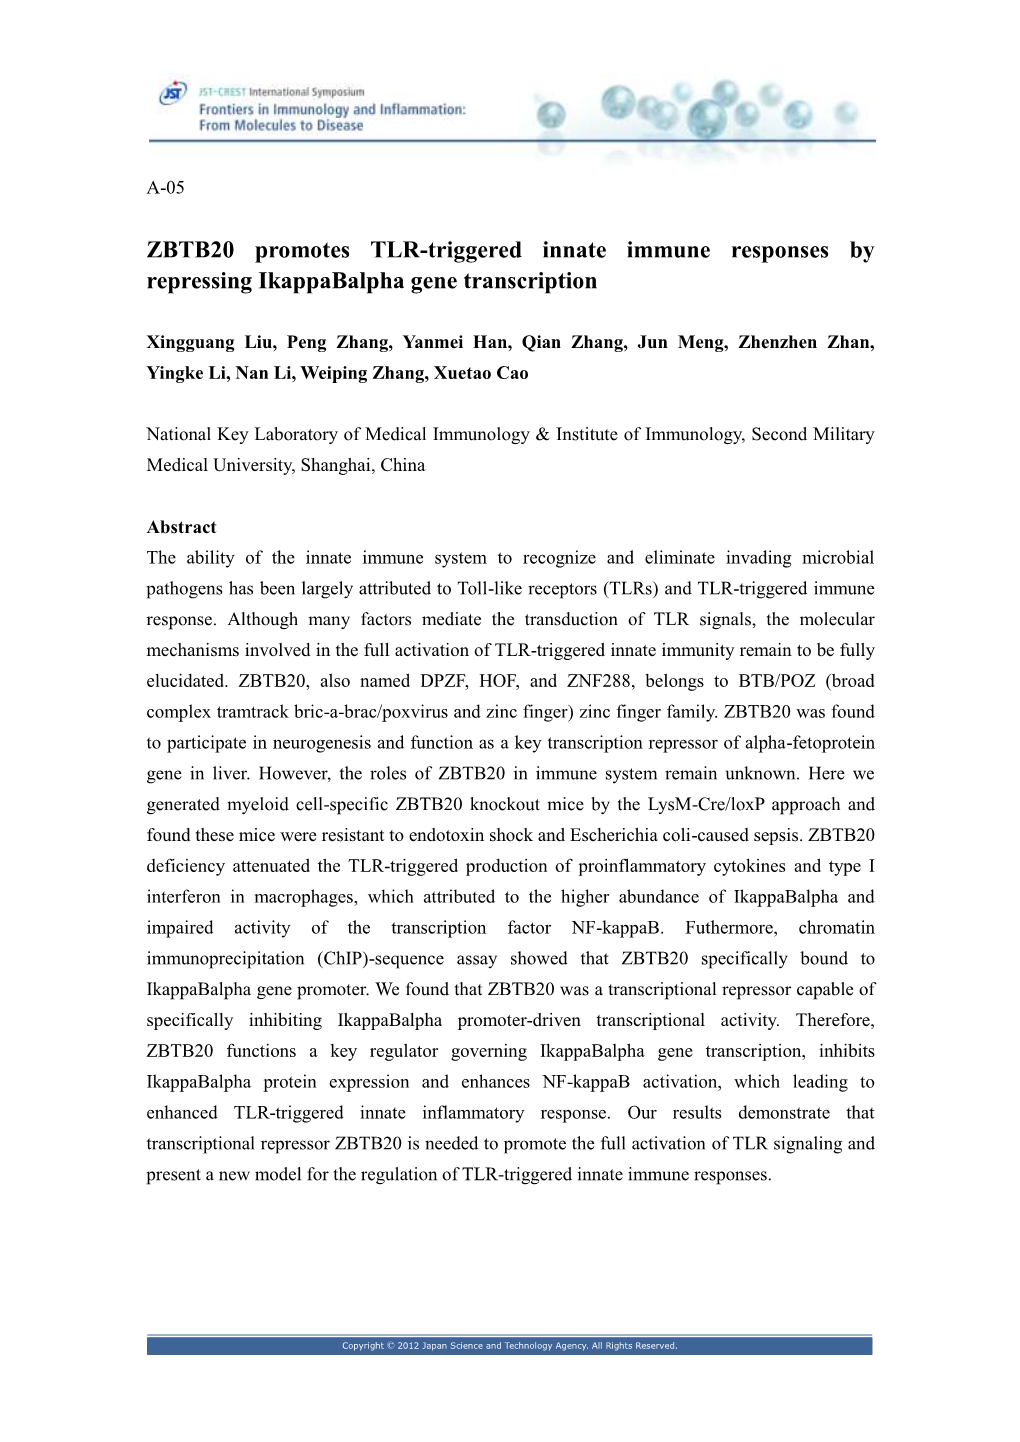 ZBTB20 Promotes TLR-Triggered Innate Immune Responses by Repressing Ikappabalpha Gene Transcription